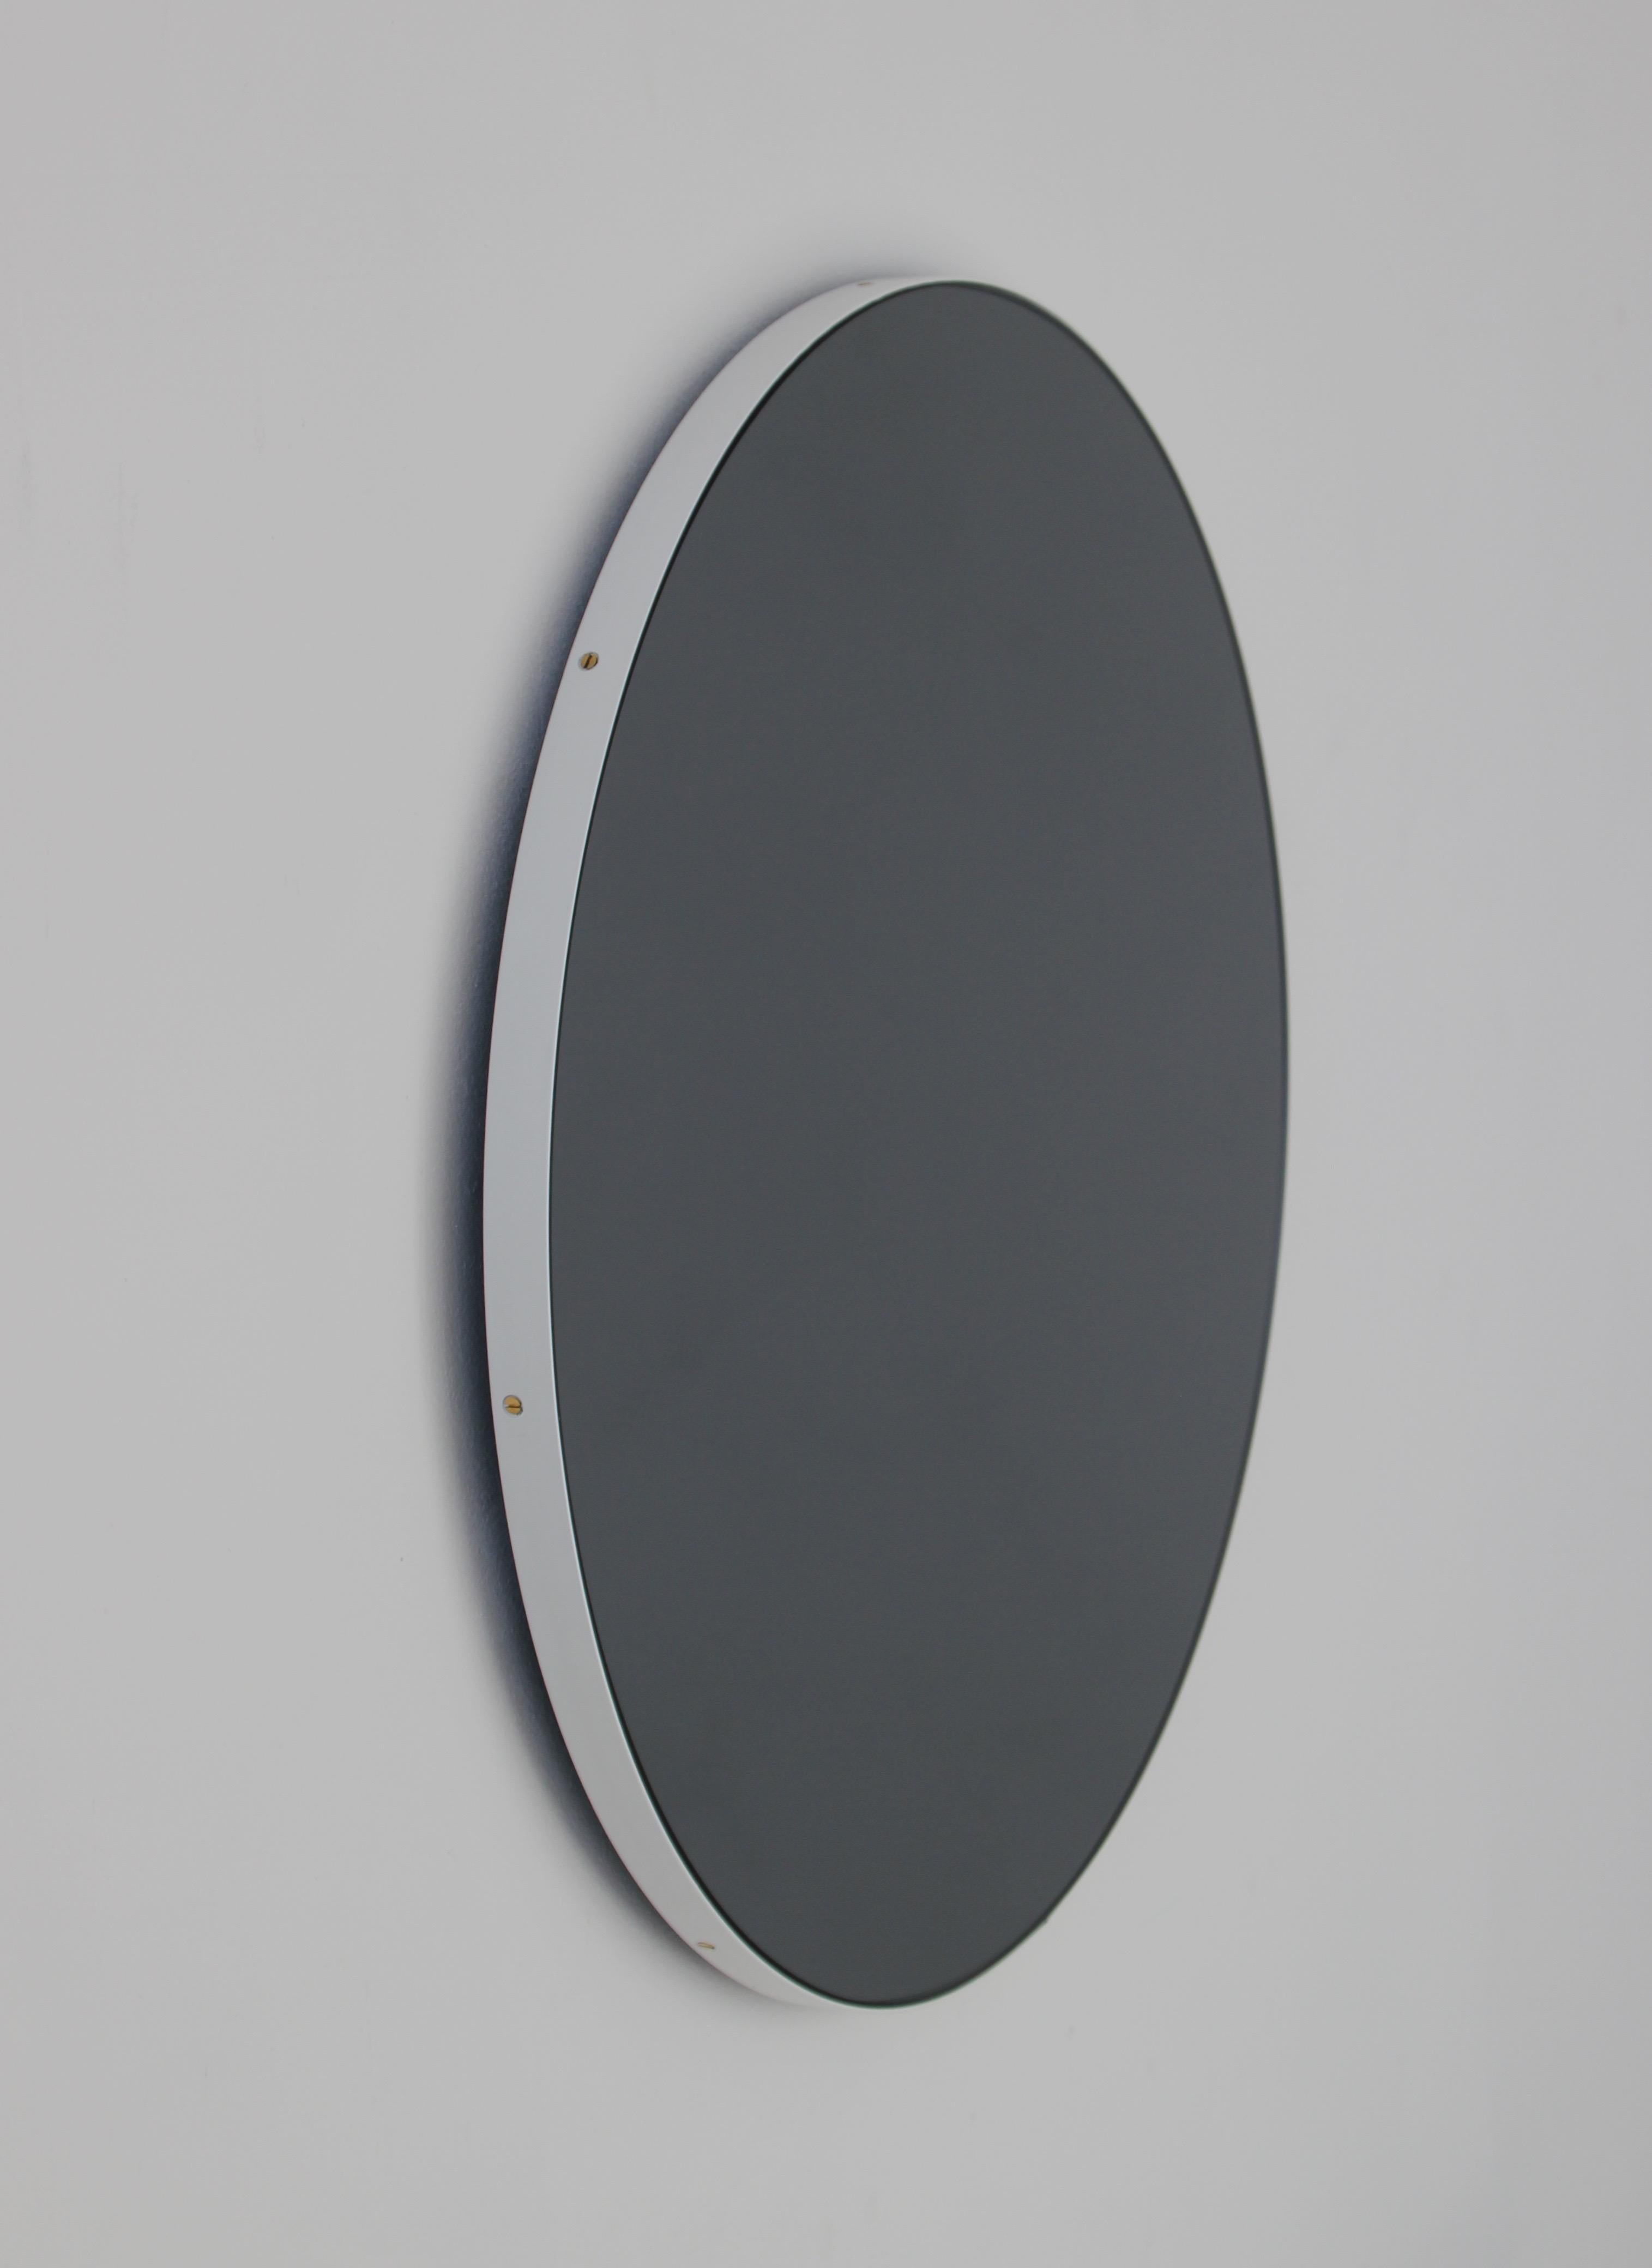 Blackened Orbis Black Tinted Bespoke Contemporary Round Mirror with White Frame - Large